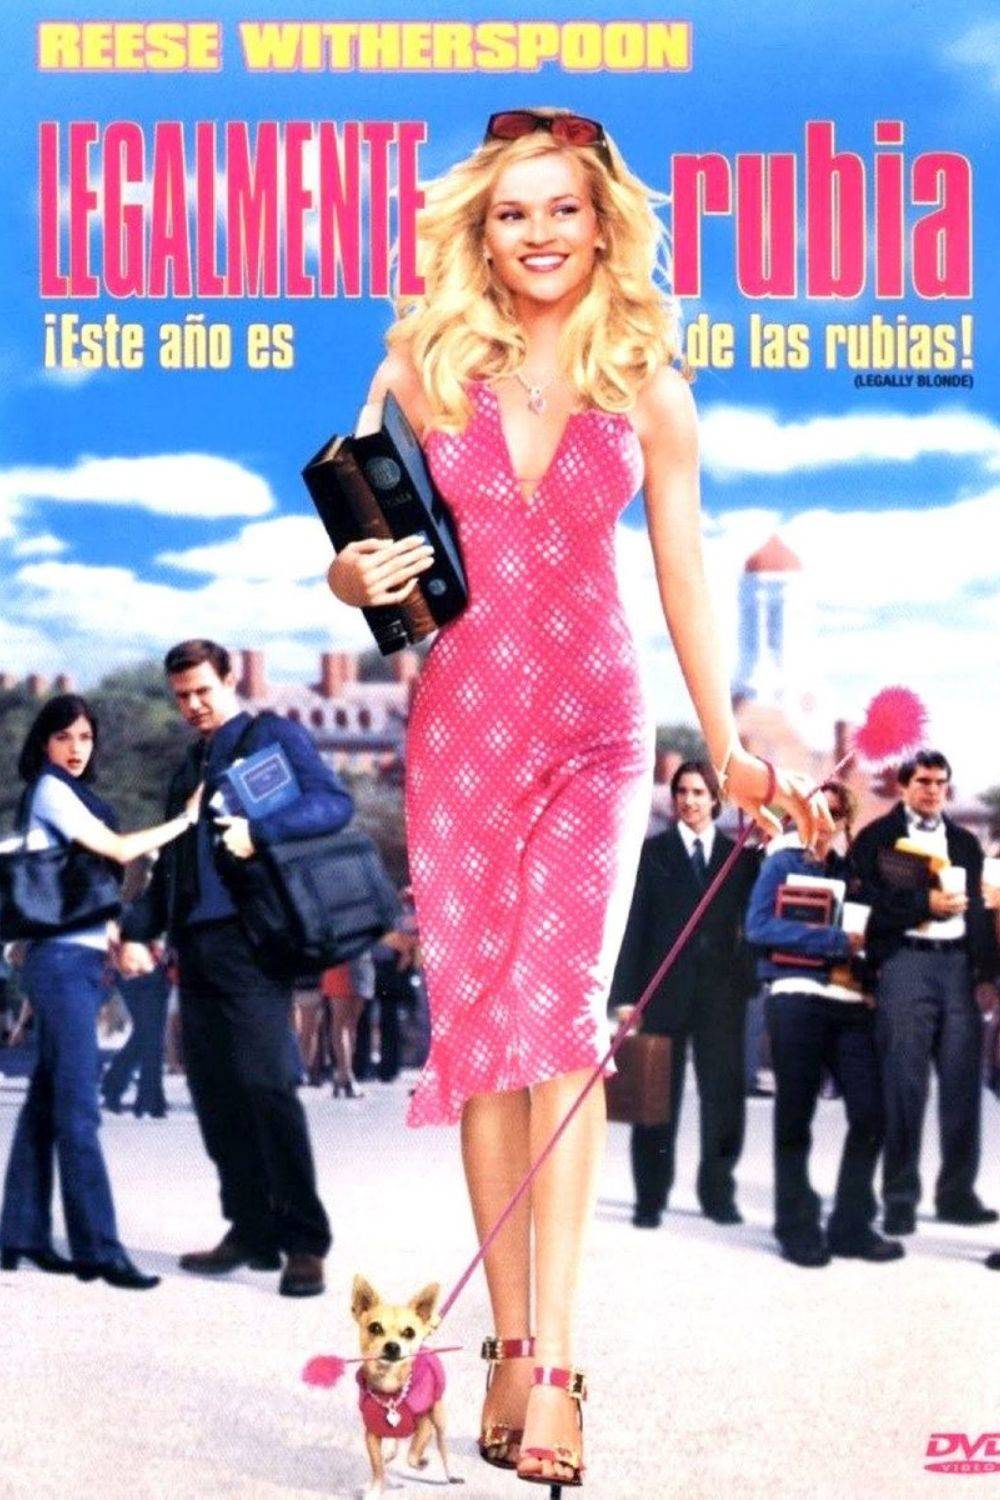 Películas de comedia netflix: Una rubia muy legal (2001)